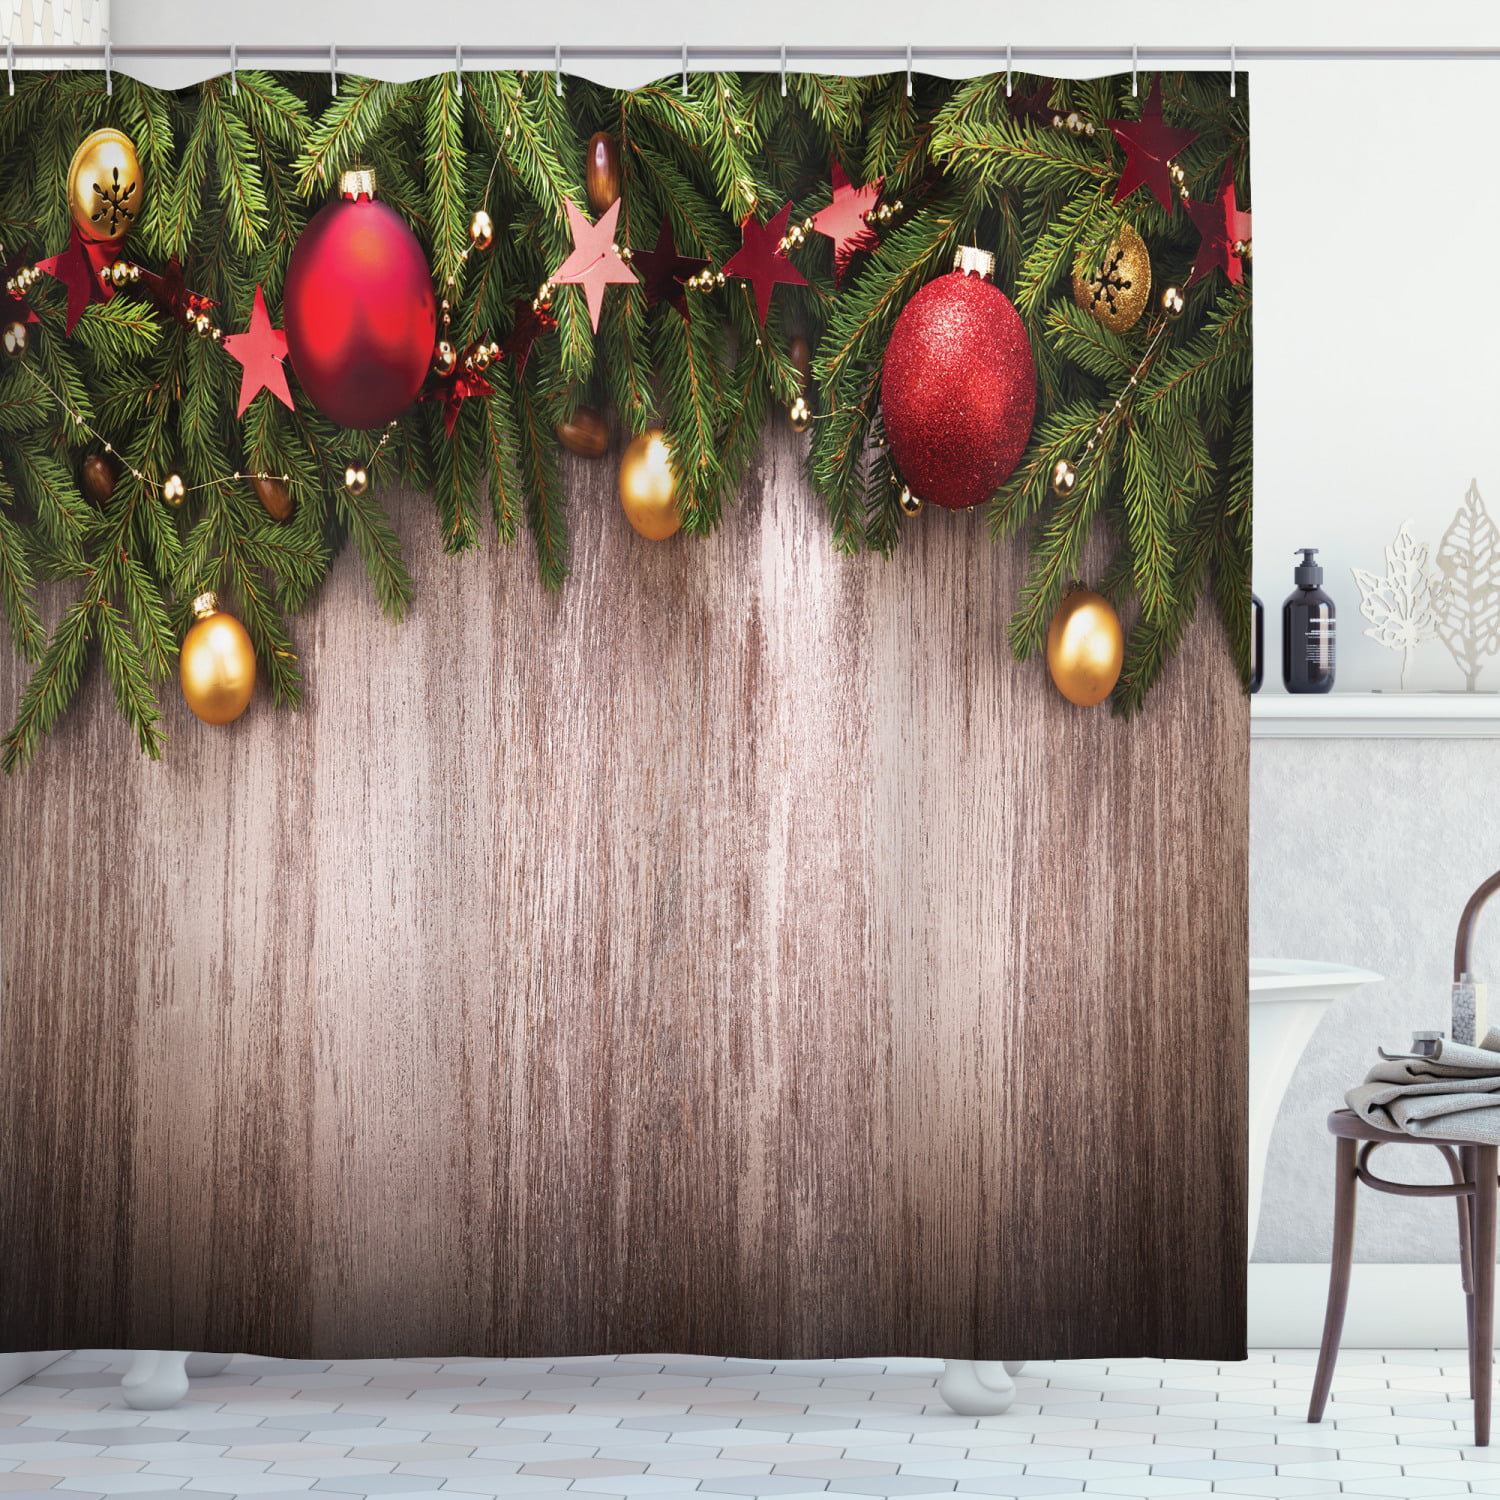 Rustic Fireplace Christmas Tree Socks Fabric Shower Curtain Set Bathroom Decor 